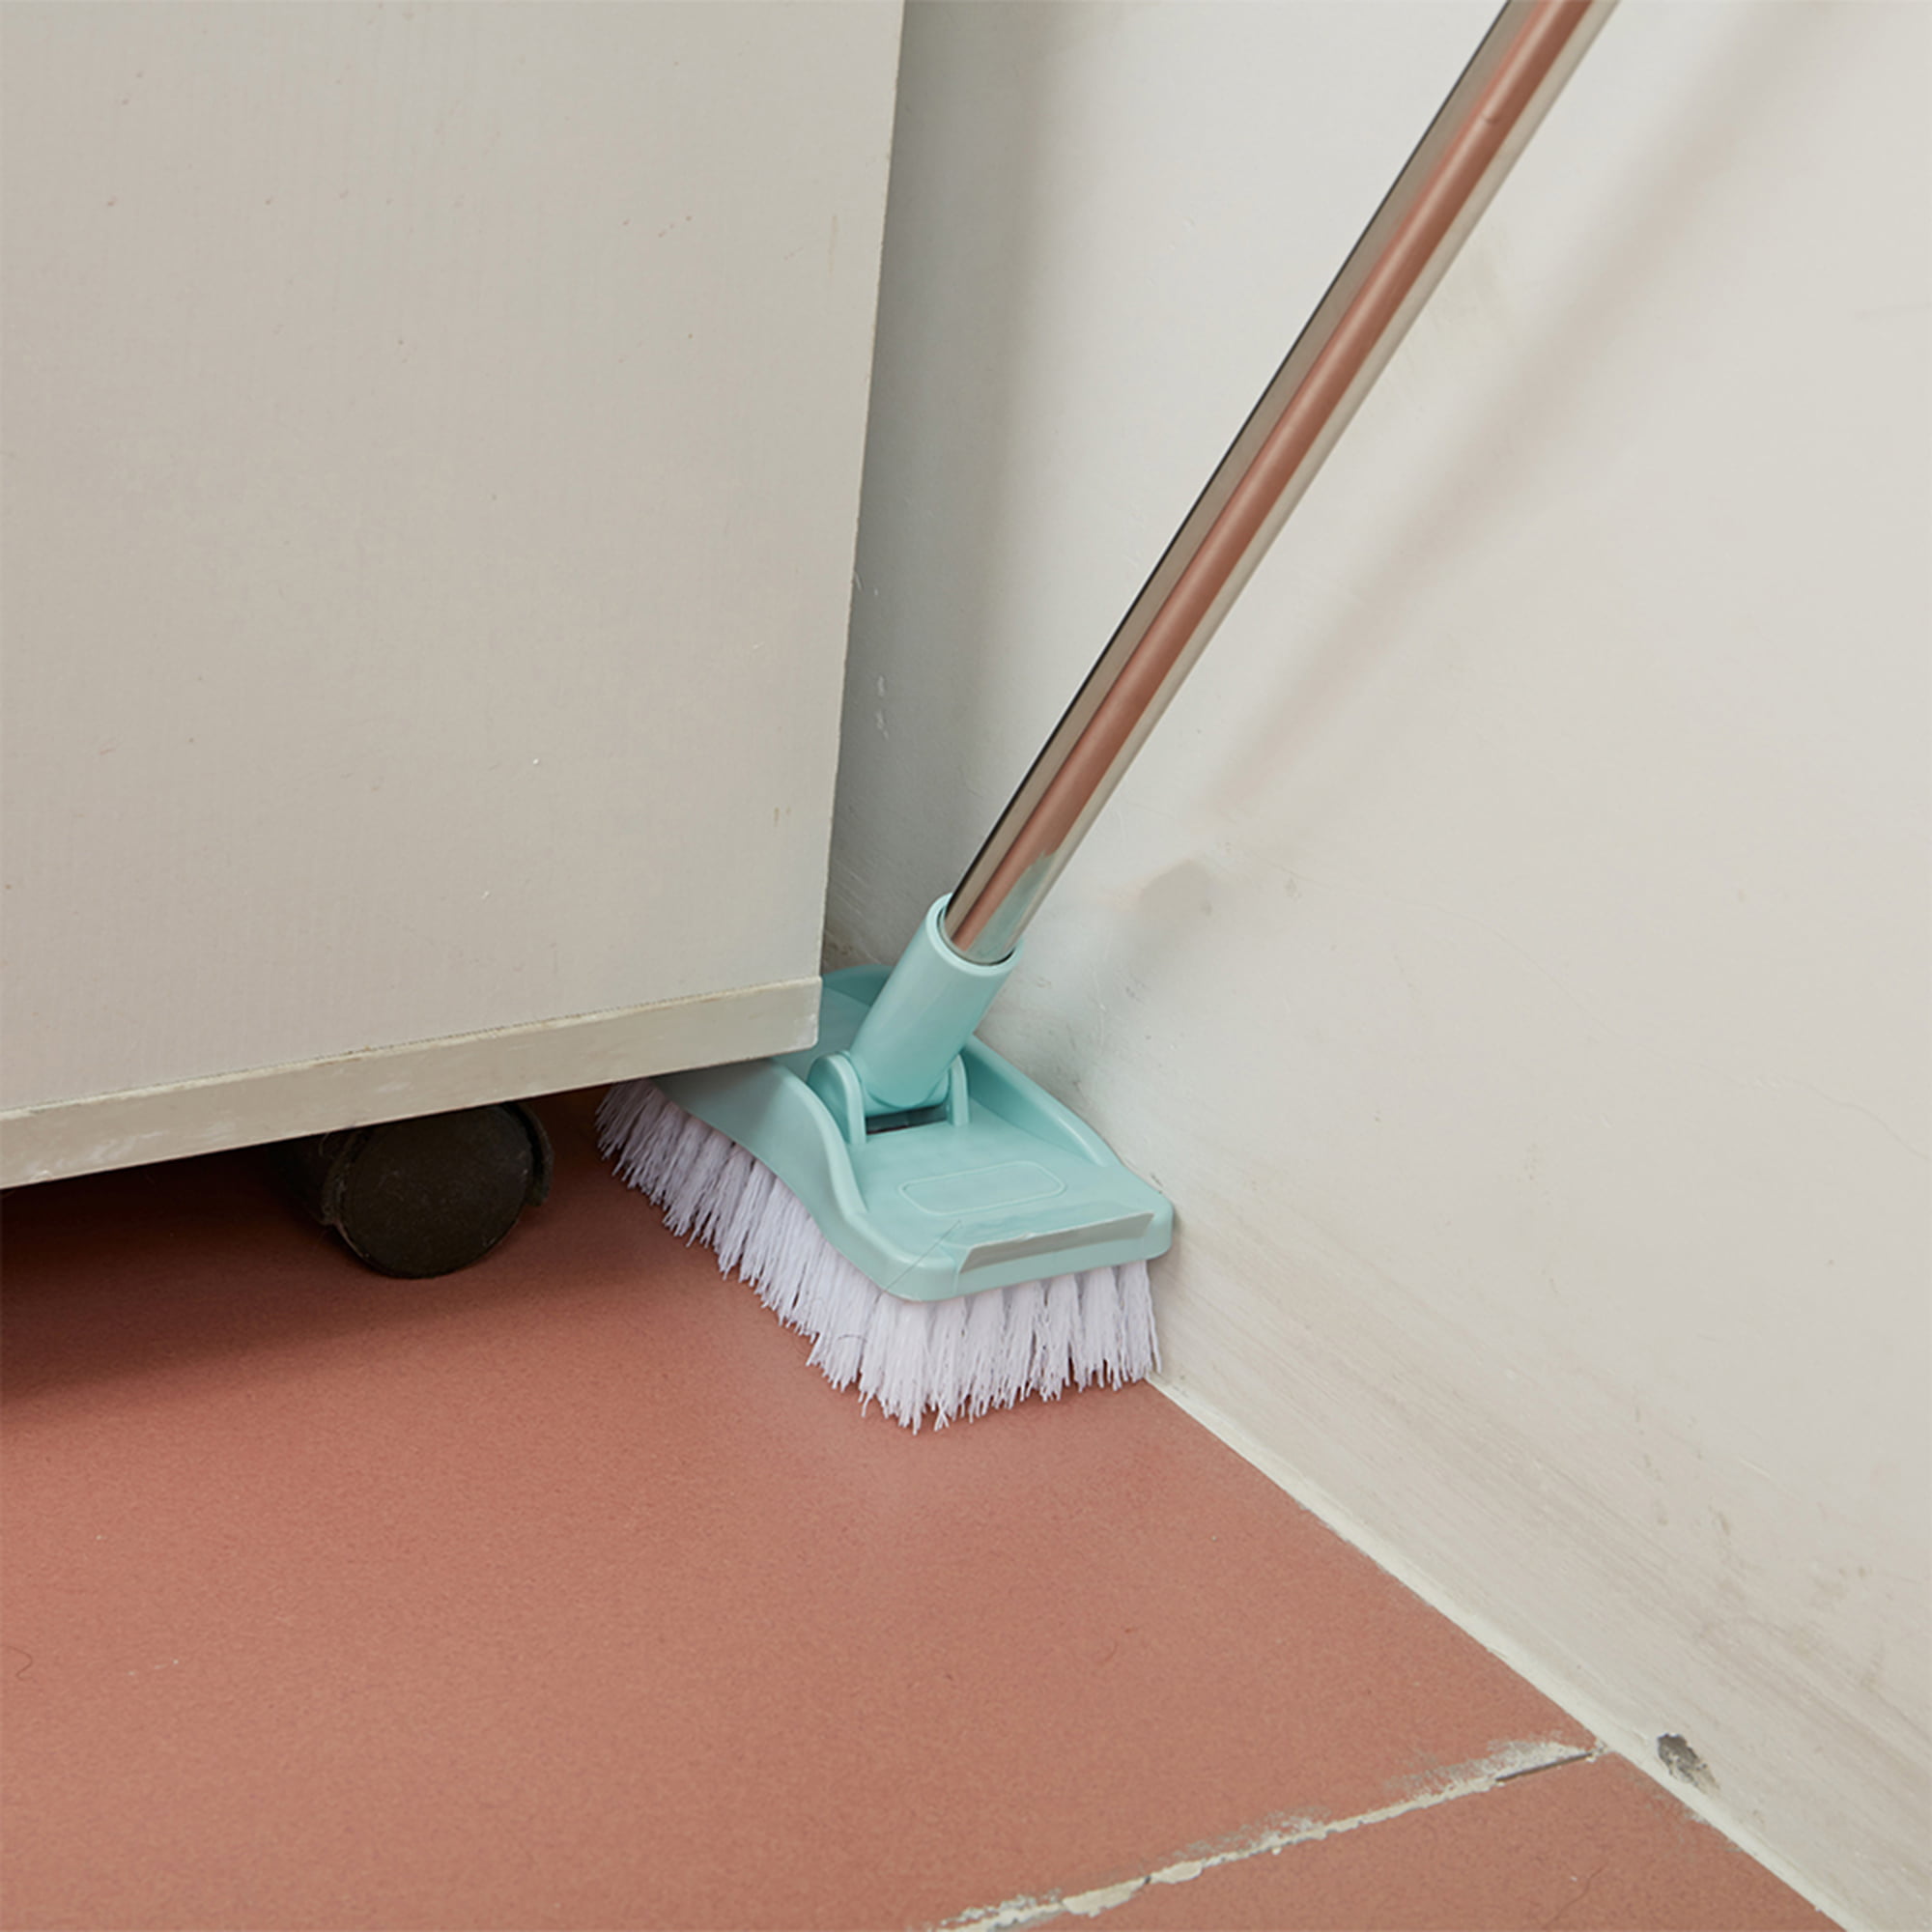 Buy VPVDZ Cleaning Brush with Long Handle, Bathroom Kitchen Floor